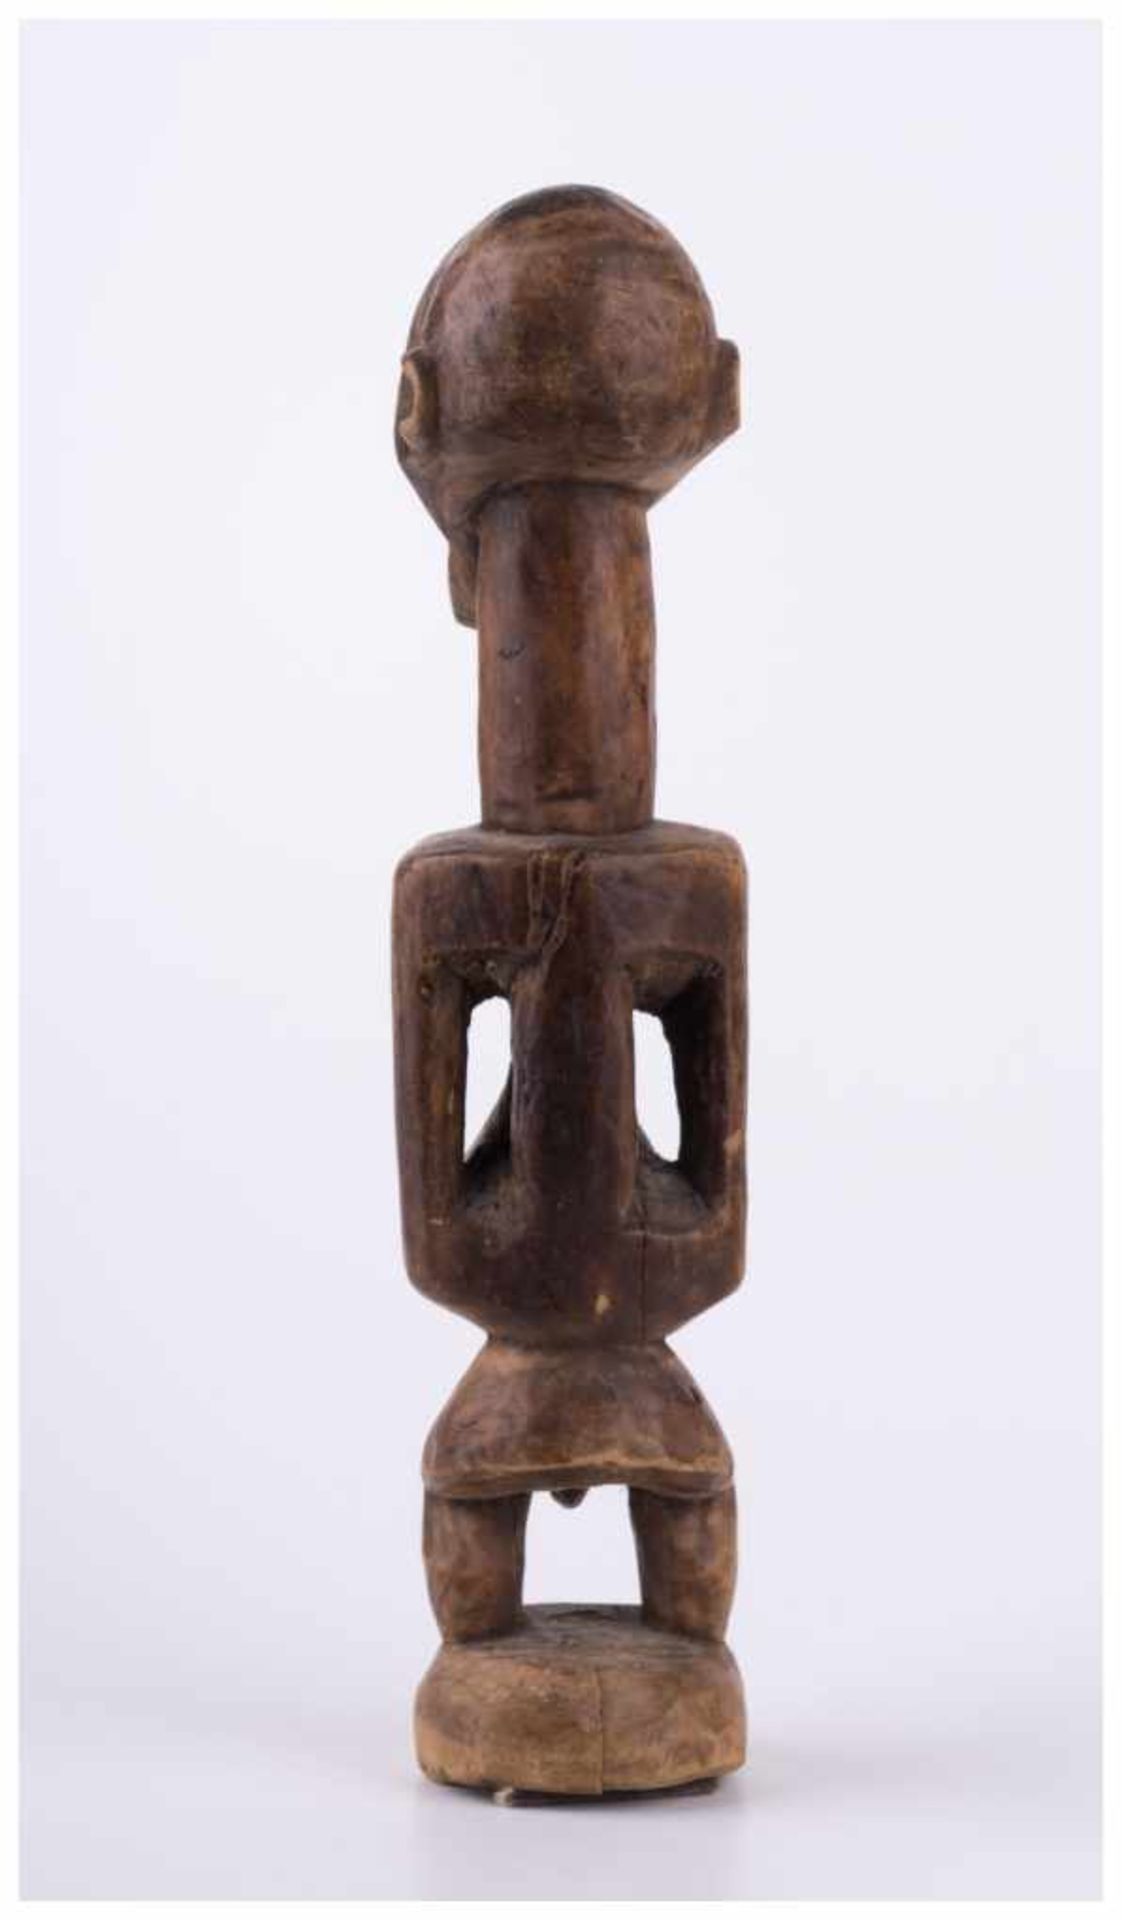 Fruchtbarkeits- Figur Afrika / Fertility figure, Africa - Holz, H: 29,5 cm - [...] - Bild 7 aus 8